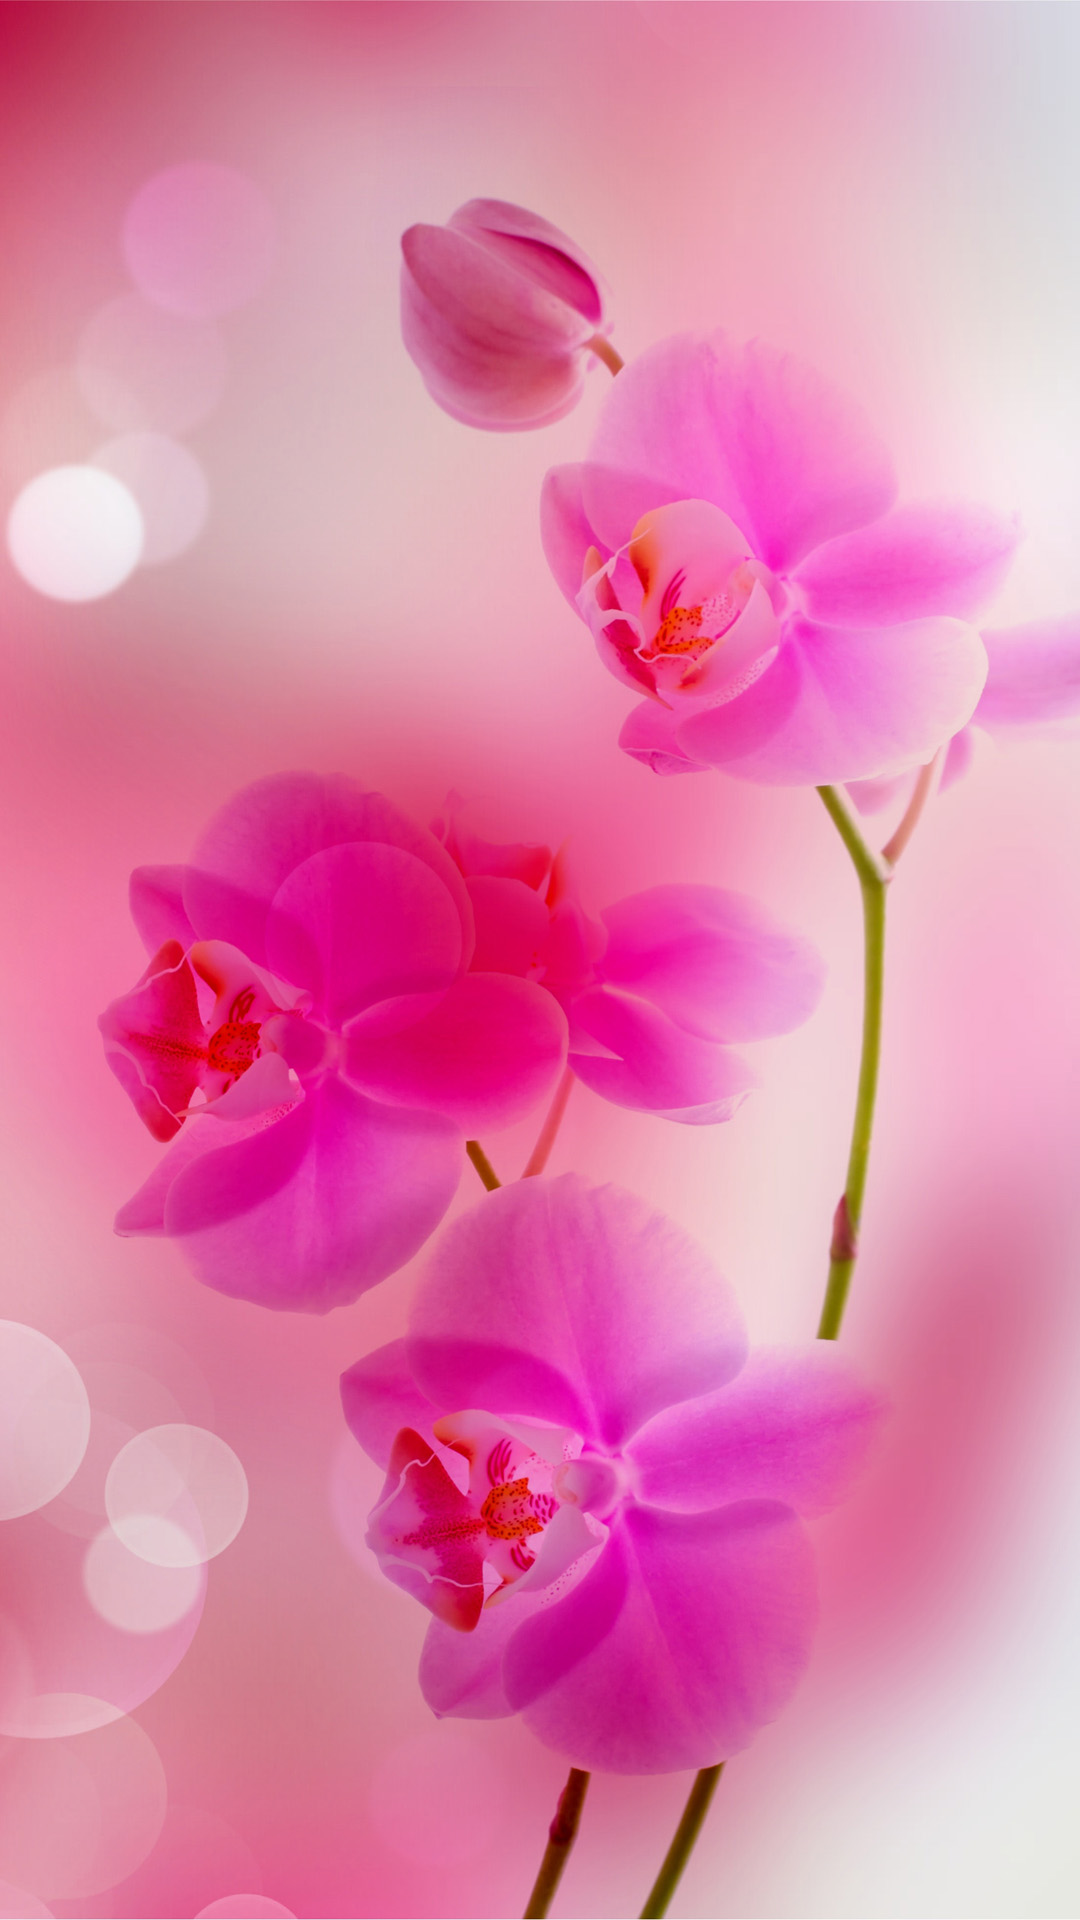 Free Download Pink Flowers iPhone 6 Plus Wallpaper Wallpaper iPhone 6s Plus